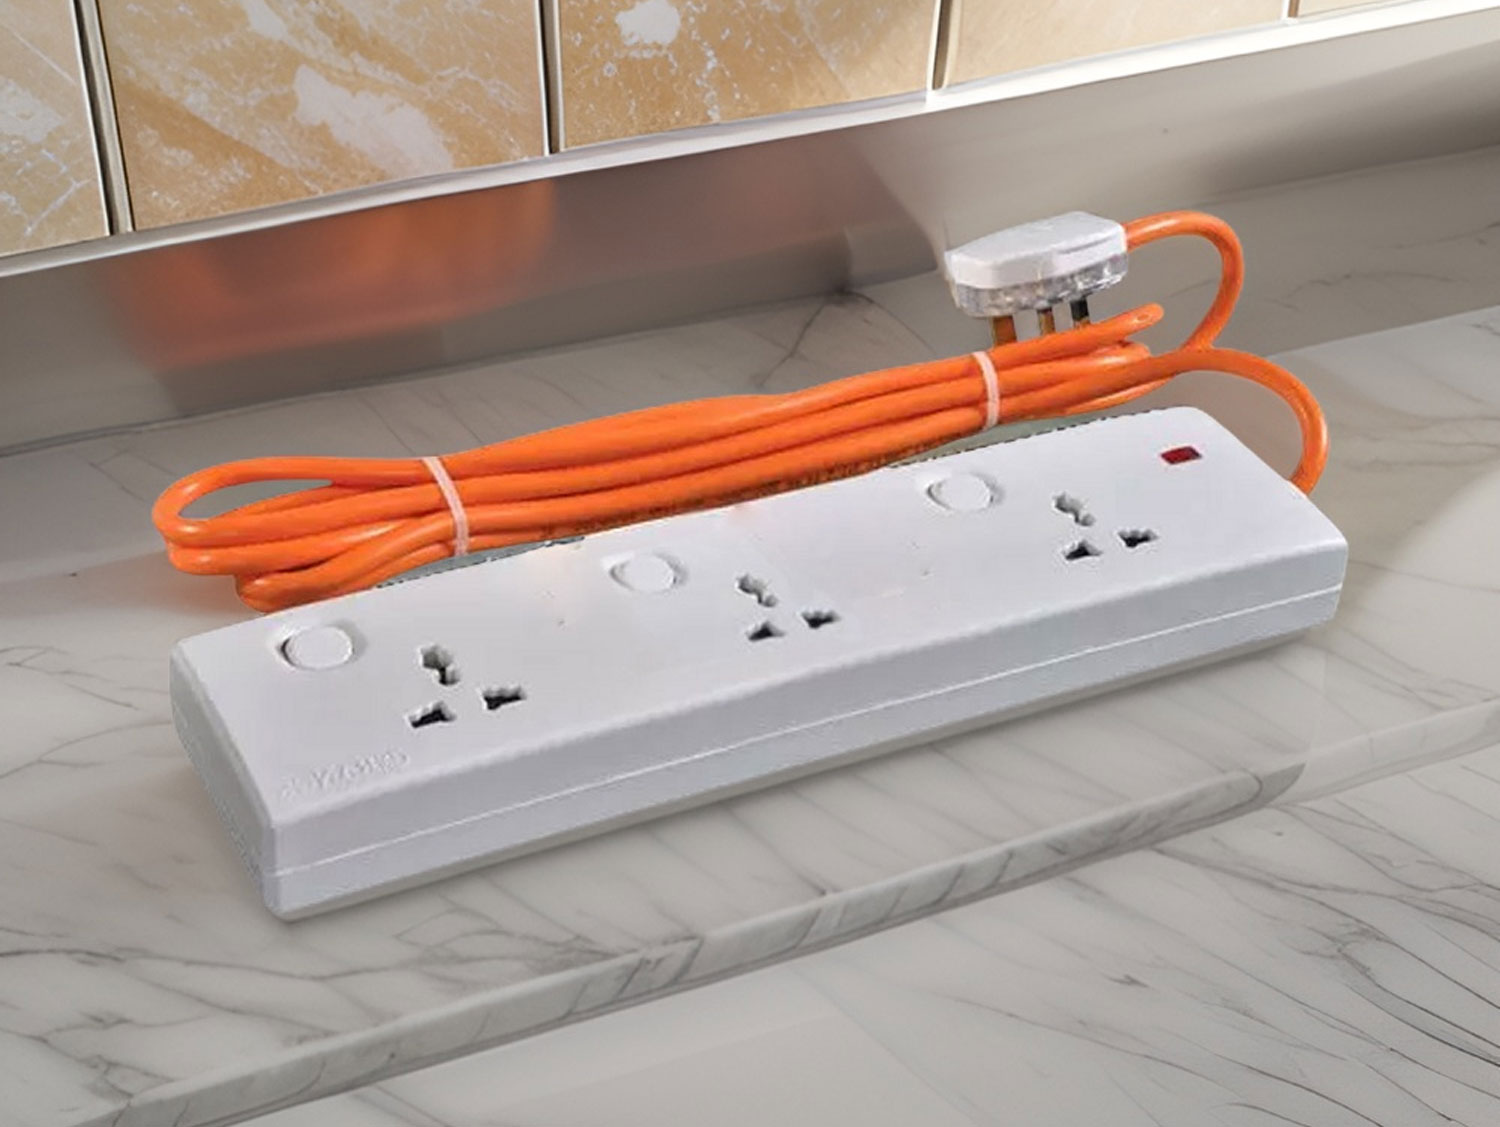 Orange Power Extension Cord